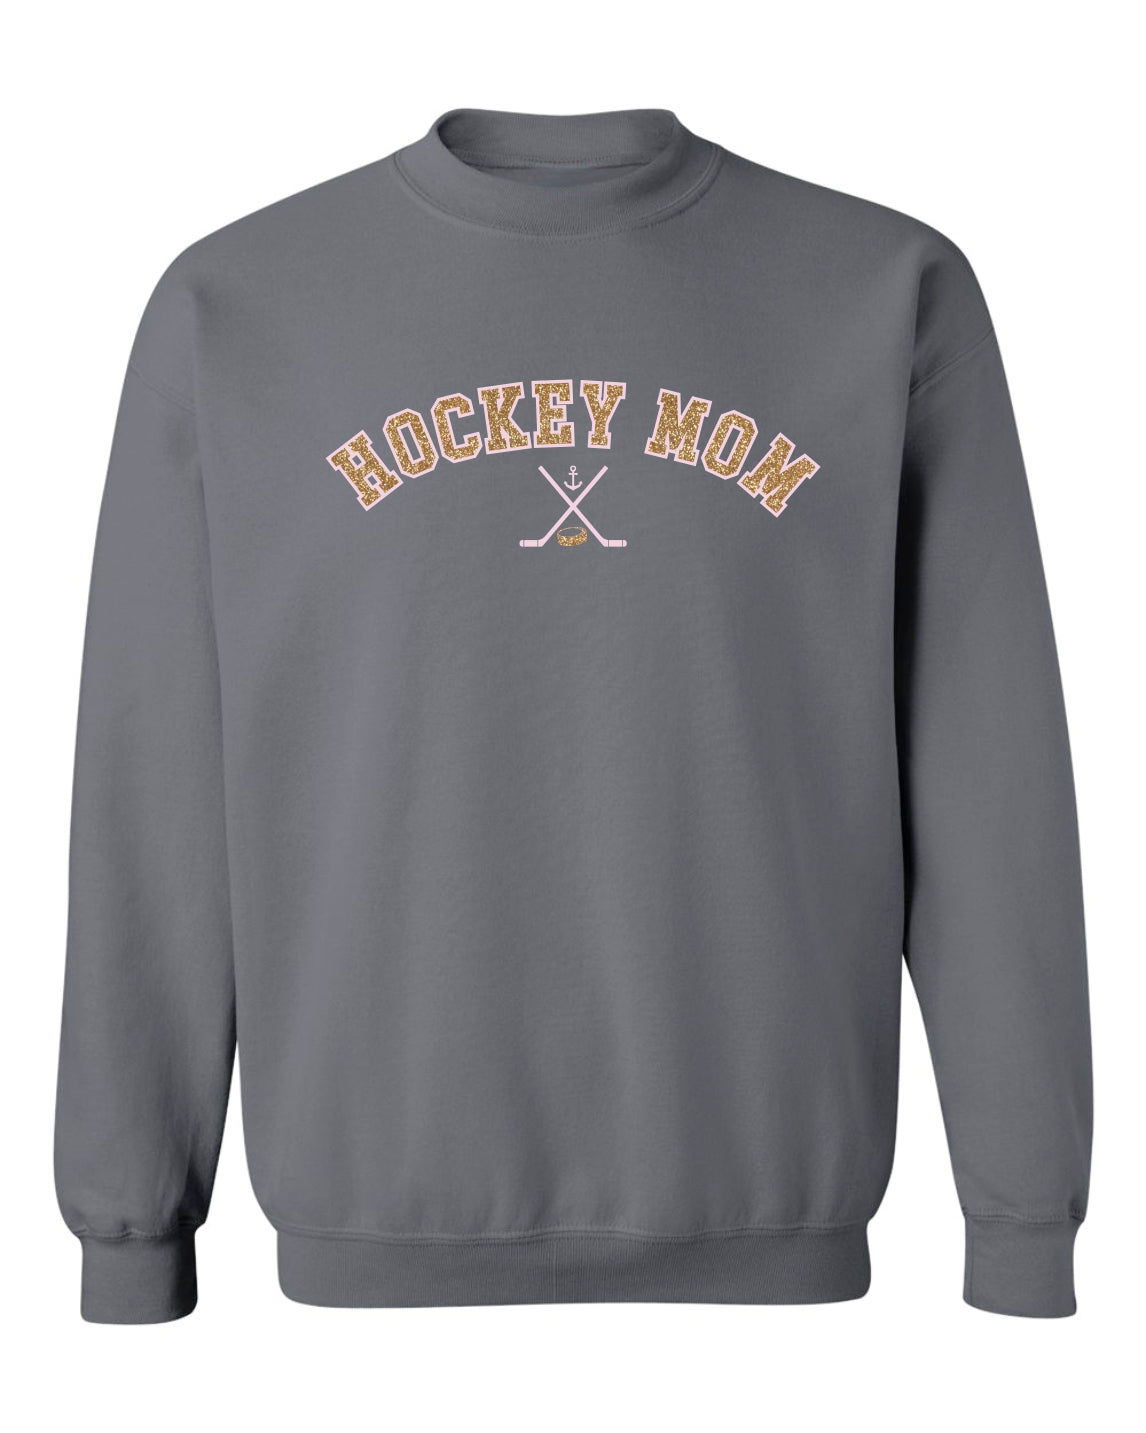 "Hockey Mom" Unisex Crewneck Sweatshirt